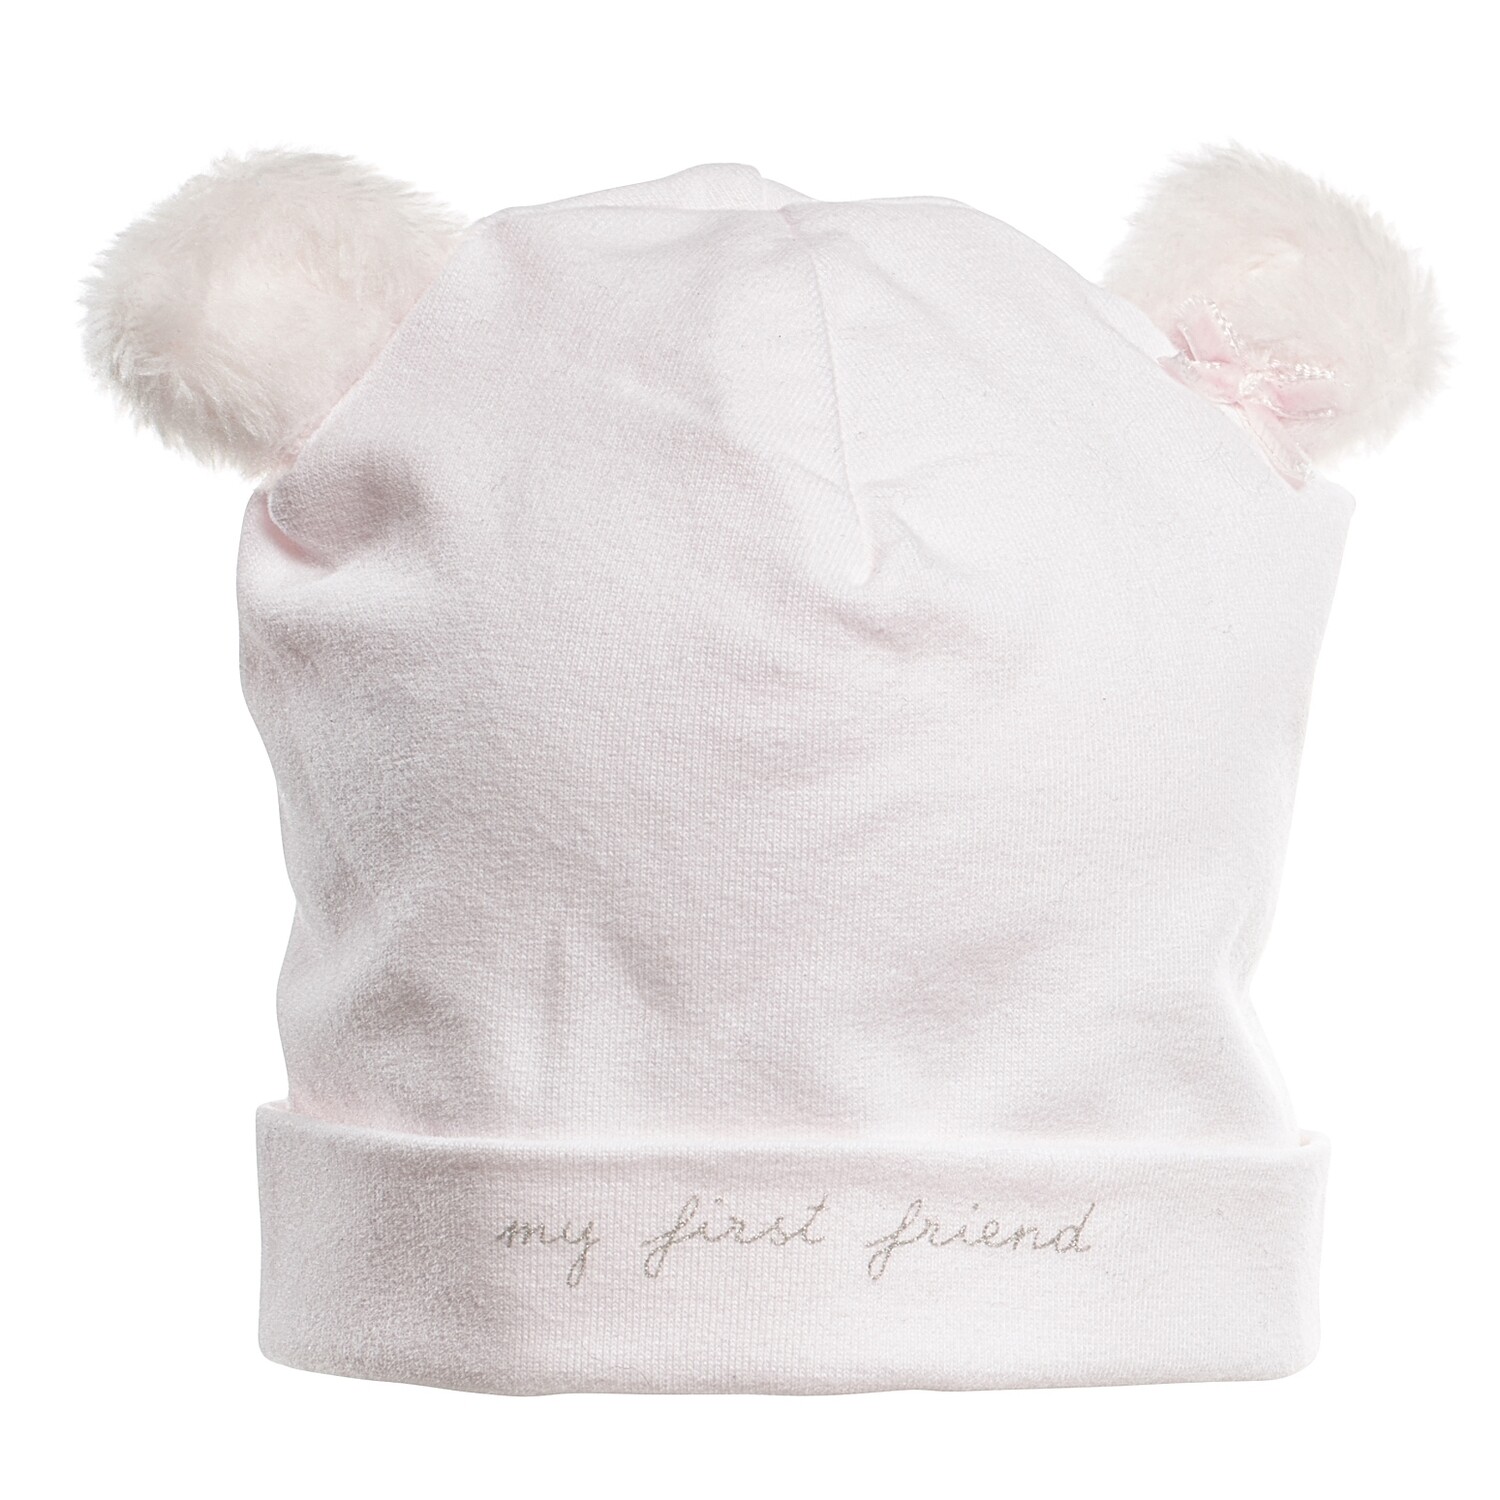 My First Collection G bonnet fur teddy bears ears - blush - pi